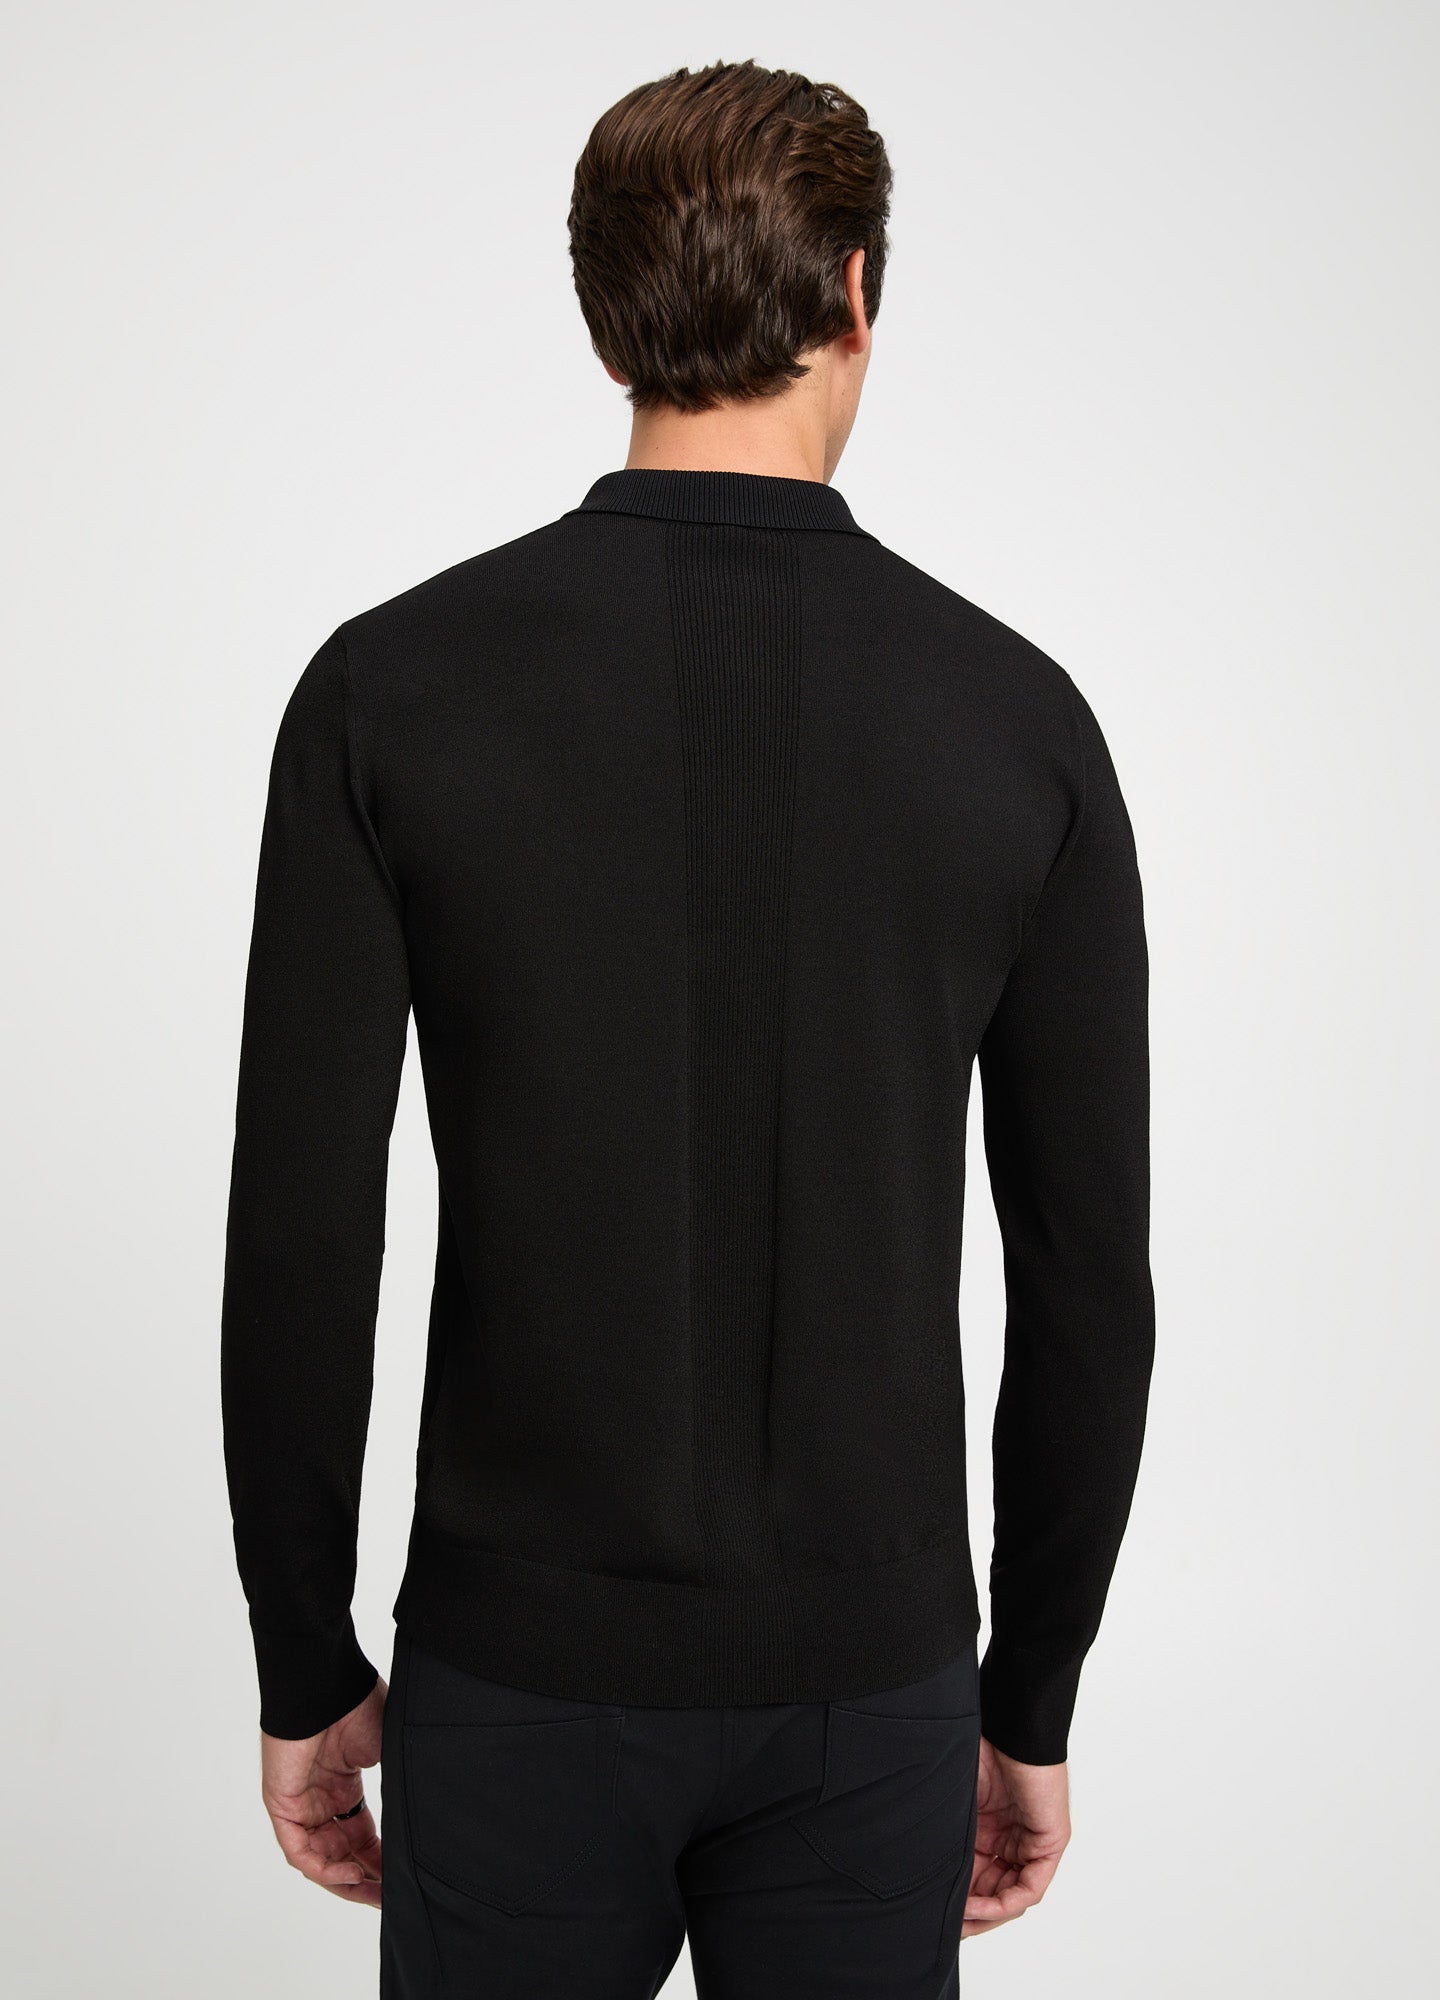 Tech Knitted Polo Black - Calibre Menswear